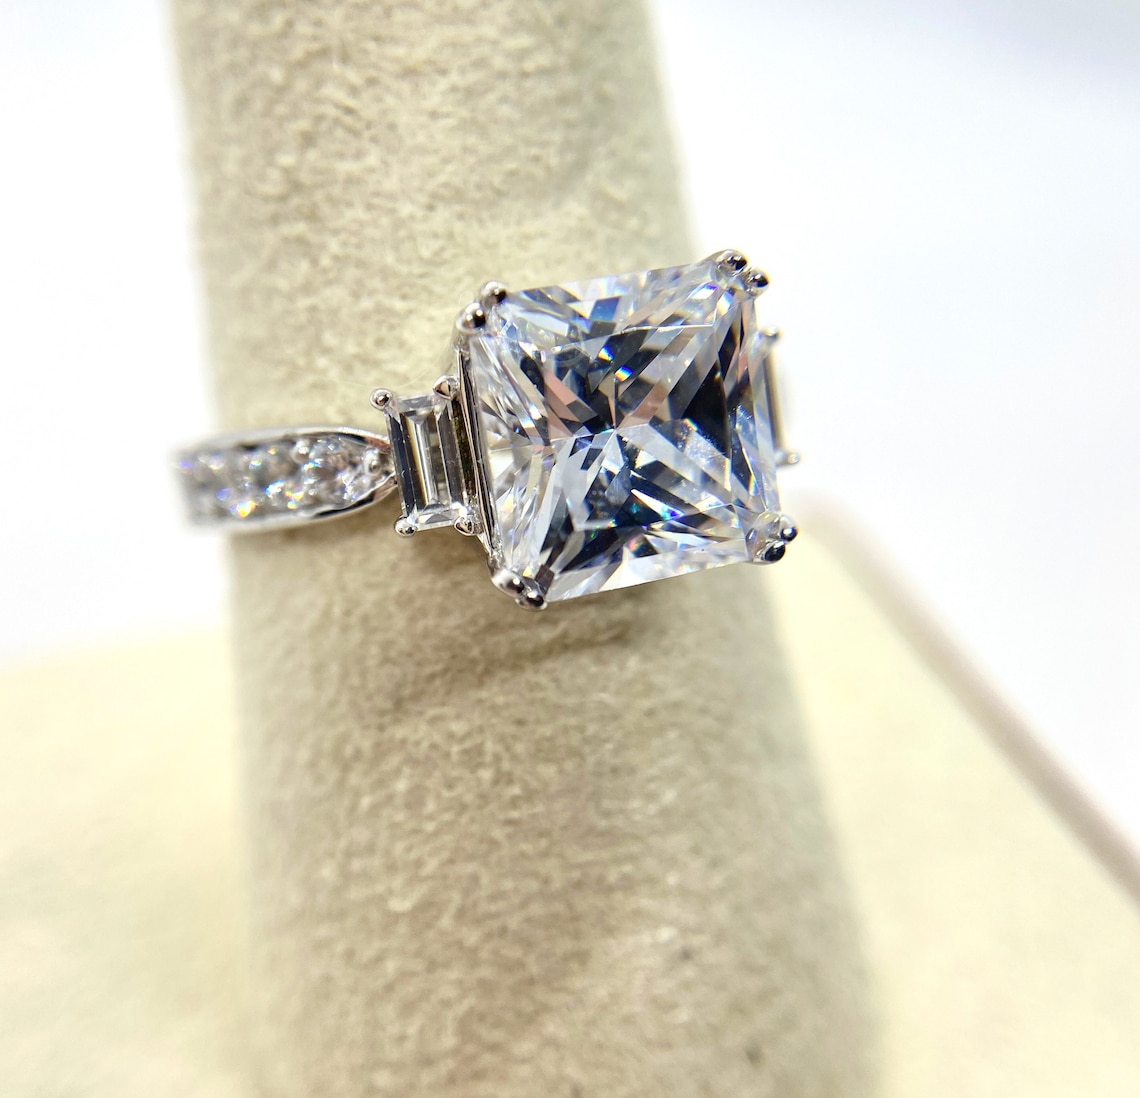 4 Carat Princess Cut Cubic Zirconia Engagement Ring in WGP | Etsy